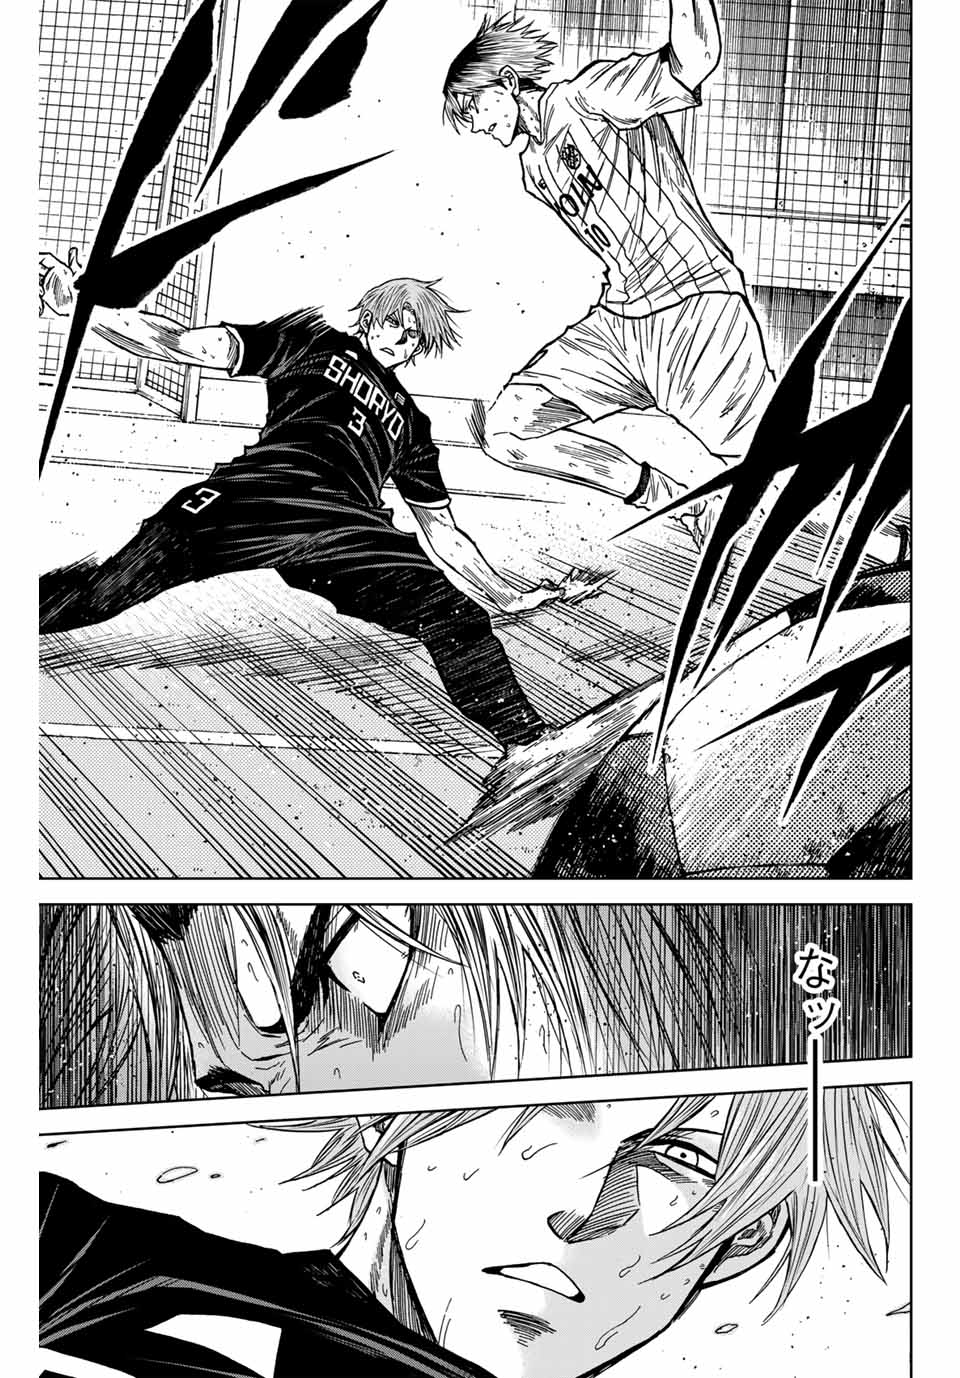 Aoku Somero - Chapter 110 - Page 3